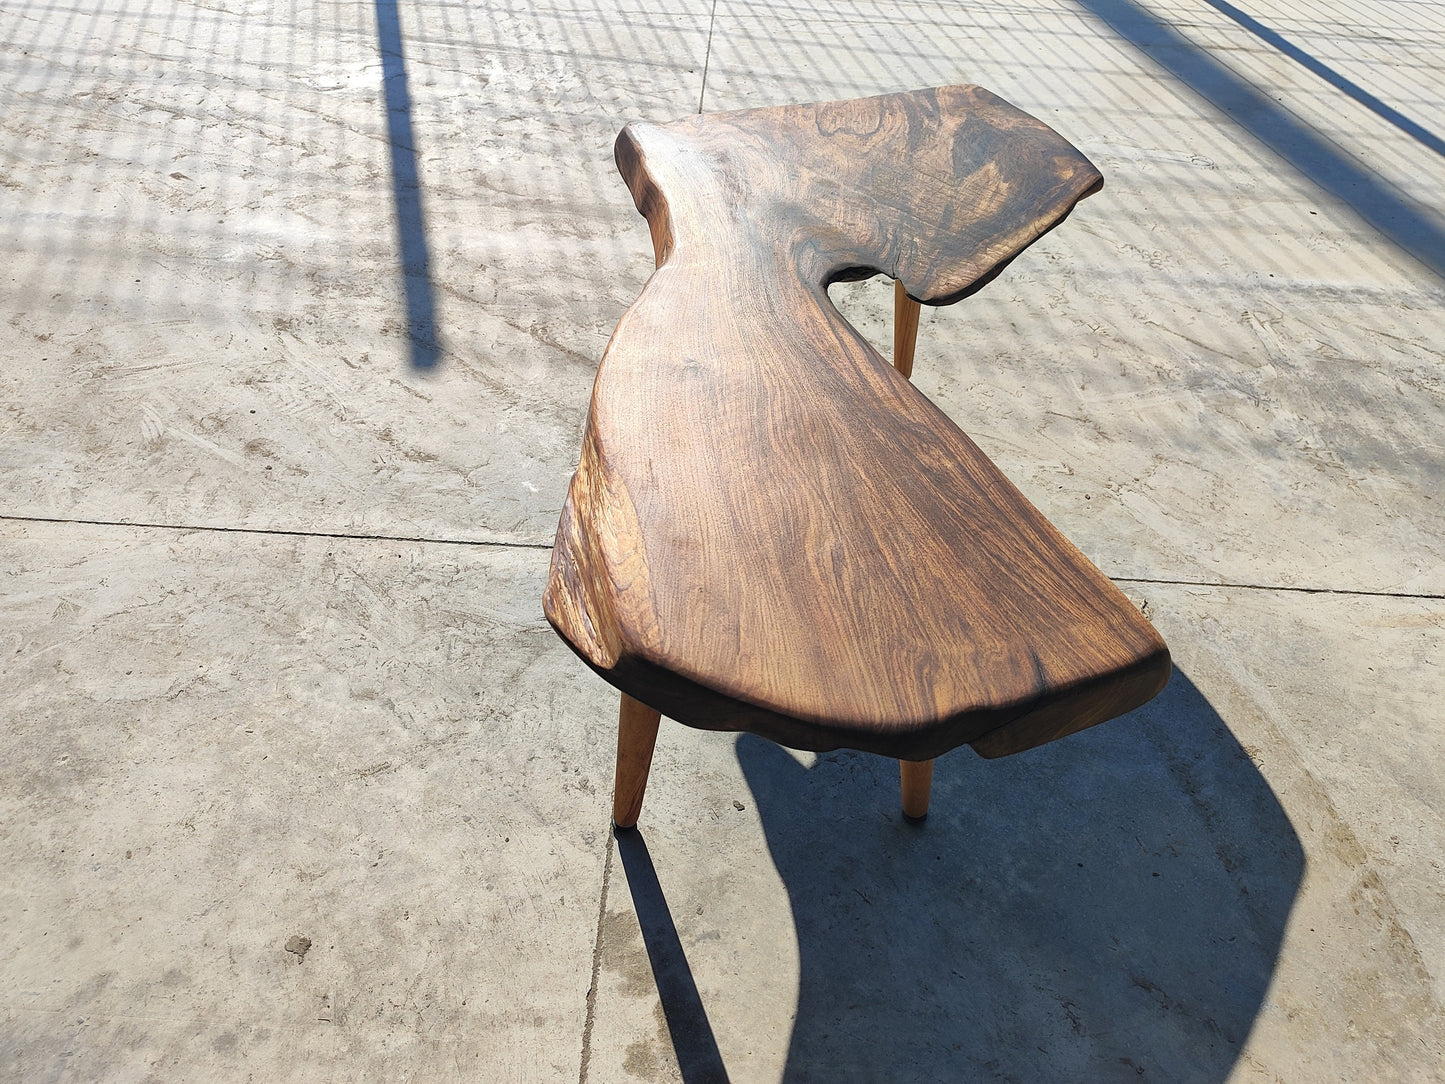 Rustic Handmade Wood Coffee Table - Unique Walnut (WG-1034)